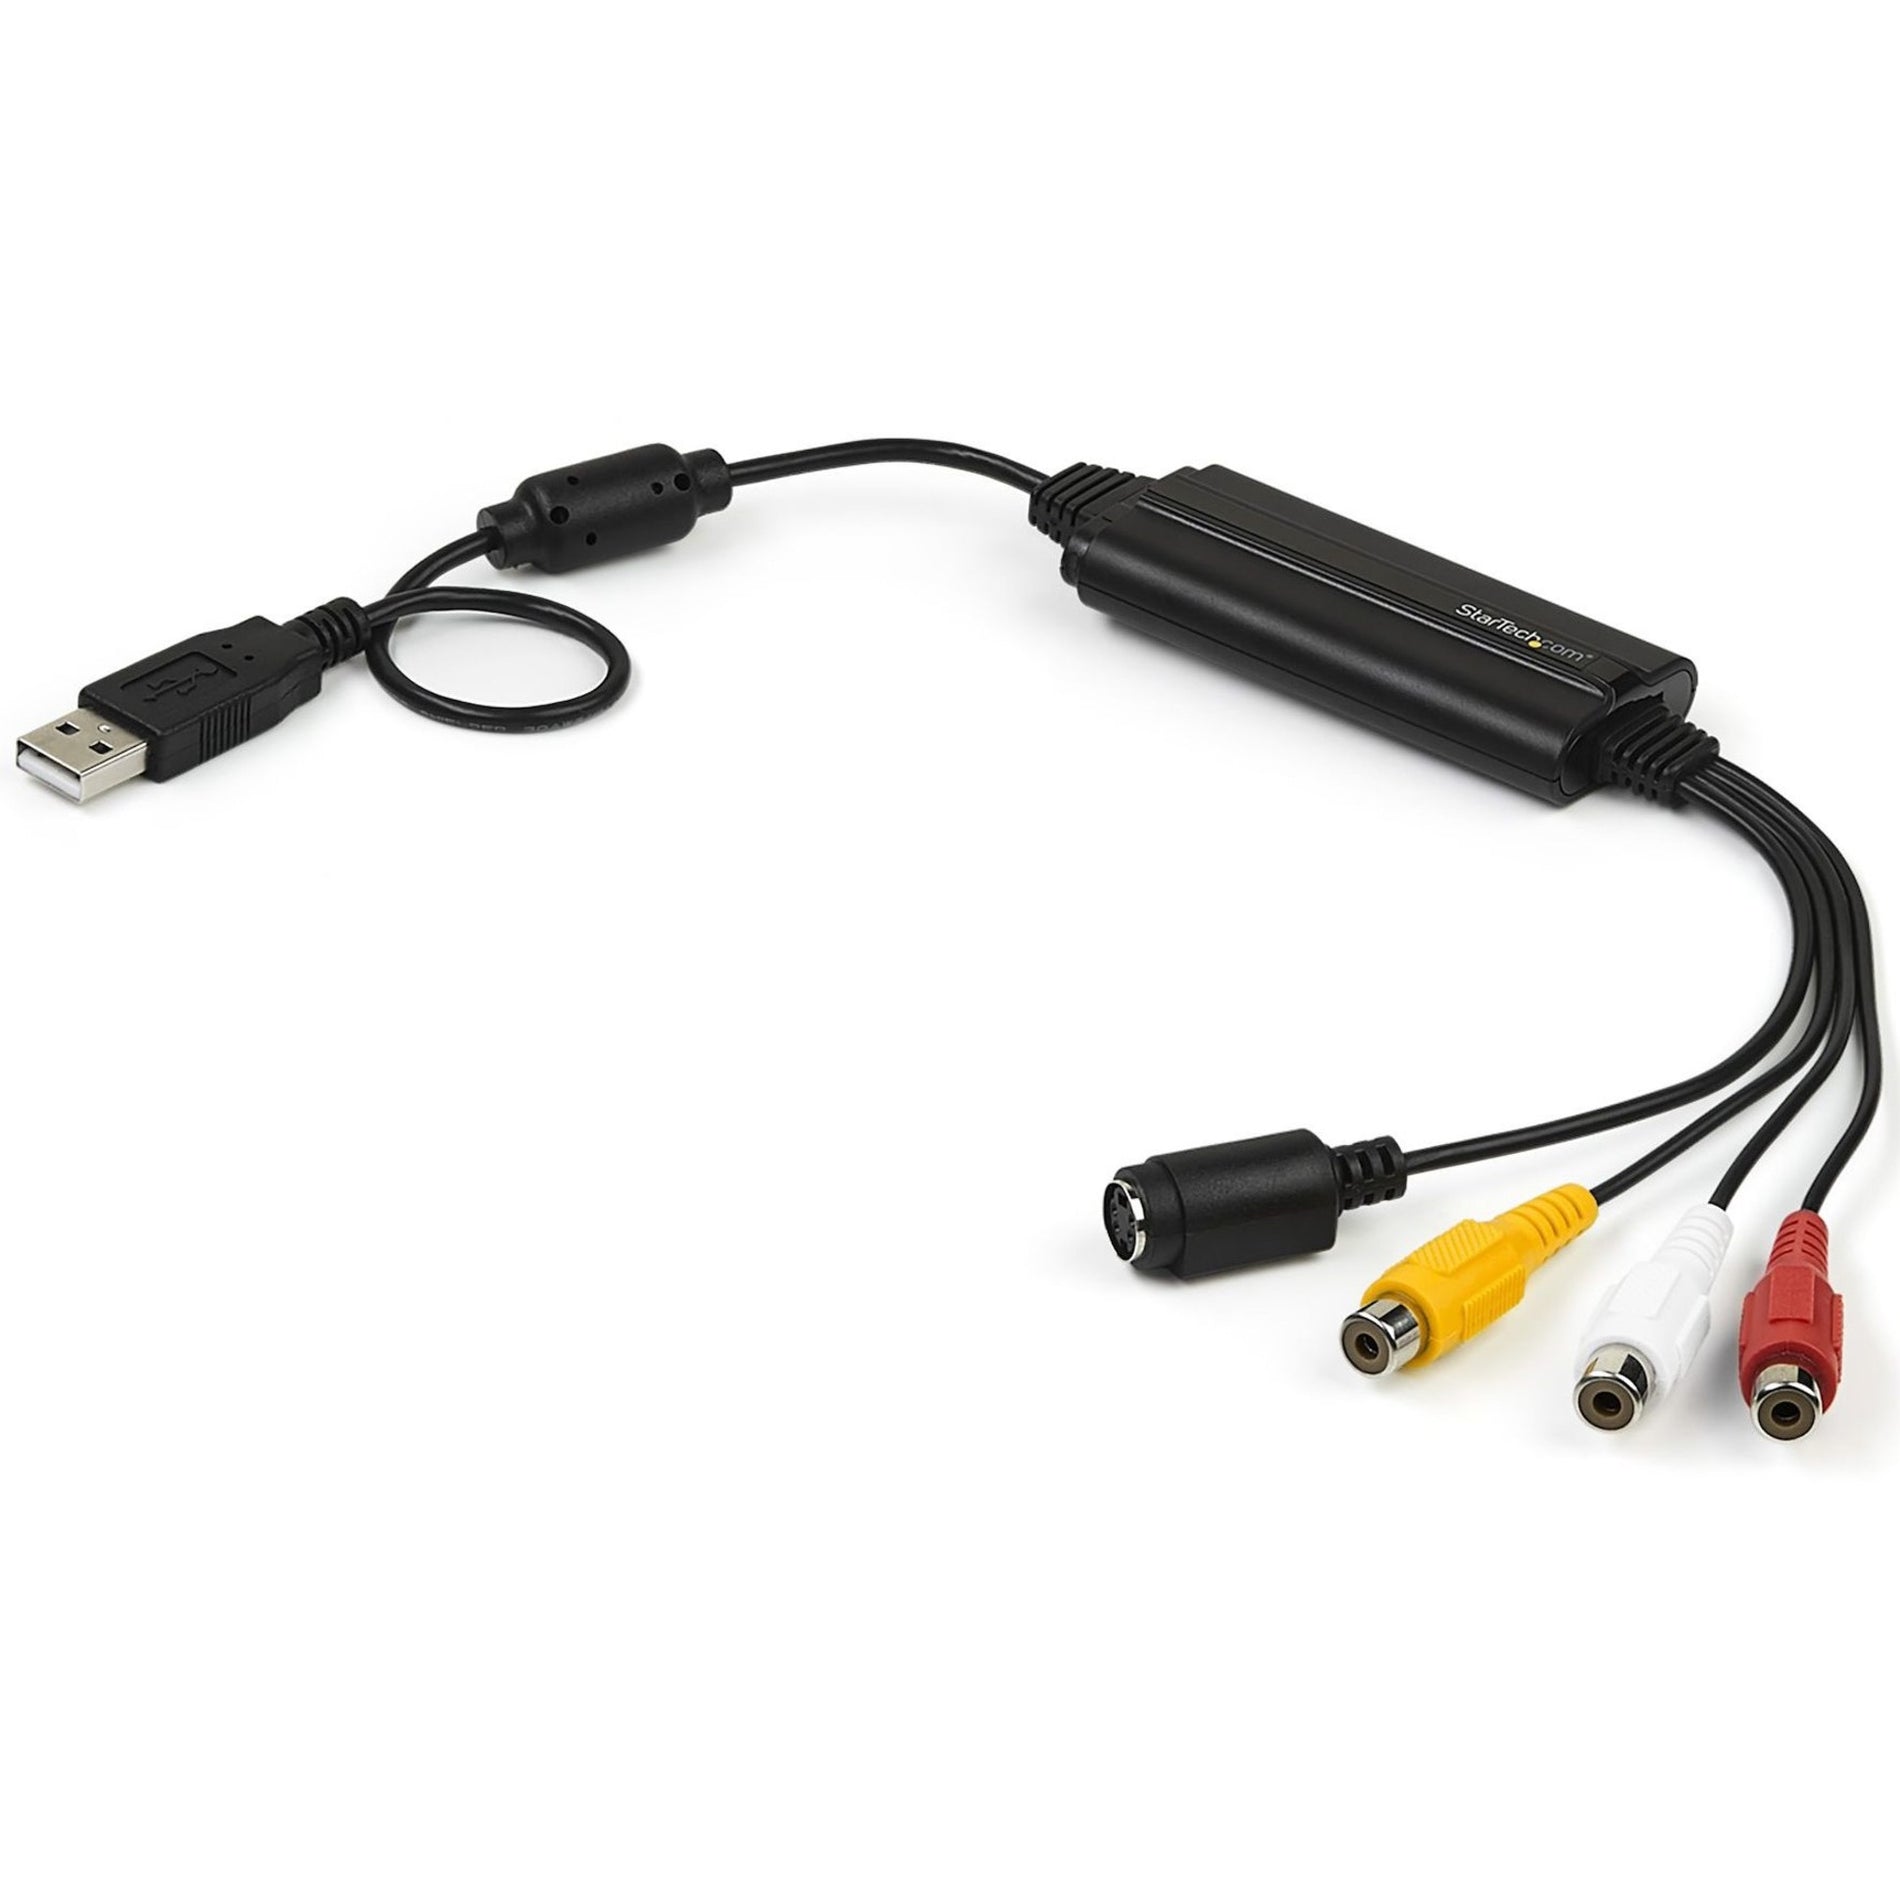 StarTech.com SVID2USB232 USB Video Capture Adapter - Analog to Digital Converter - Windows, S Video / Composite to USB 2.0 Video Capture Cable